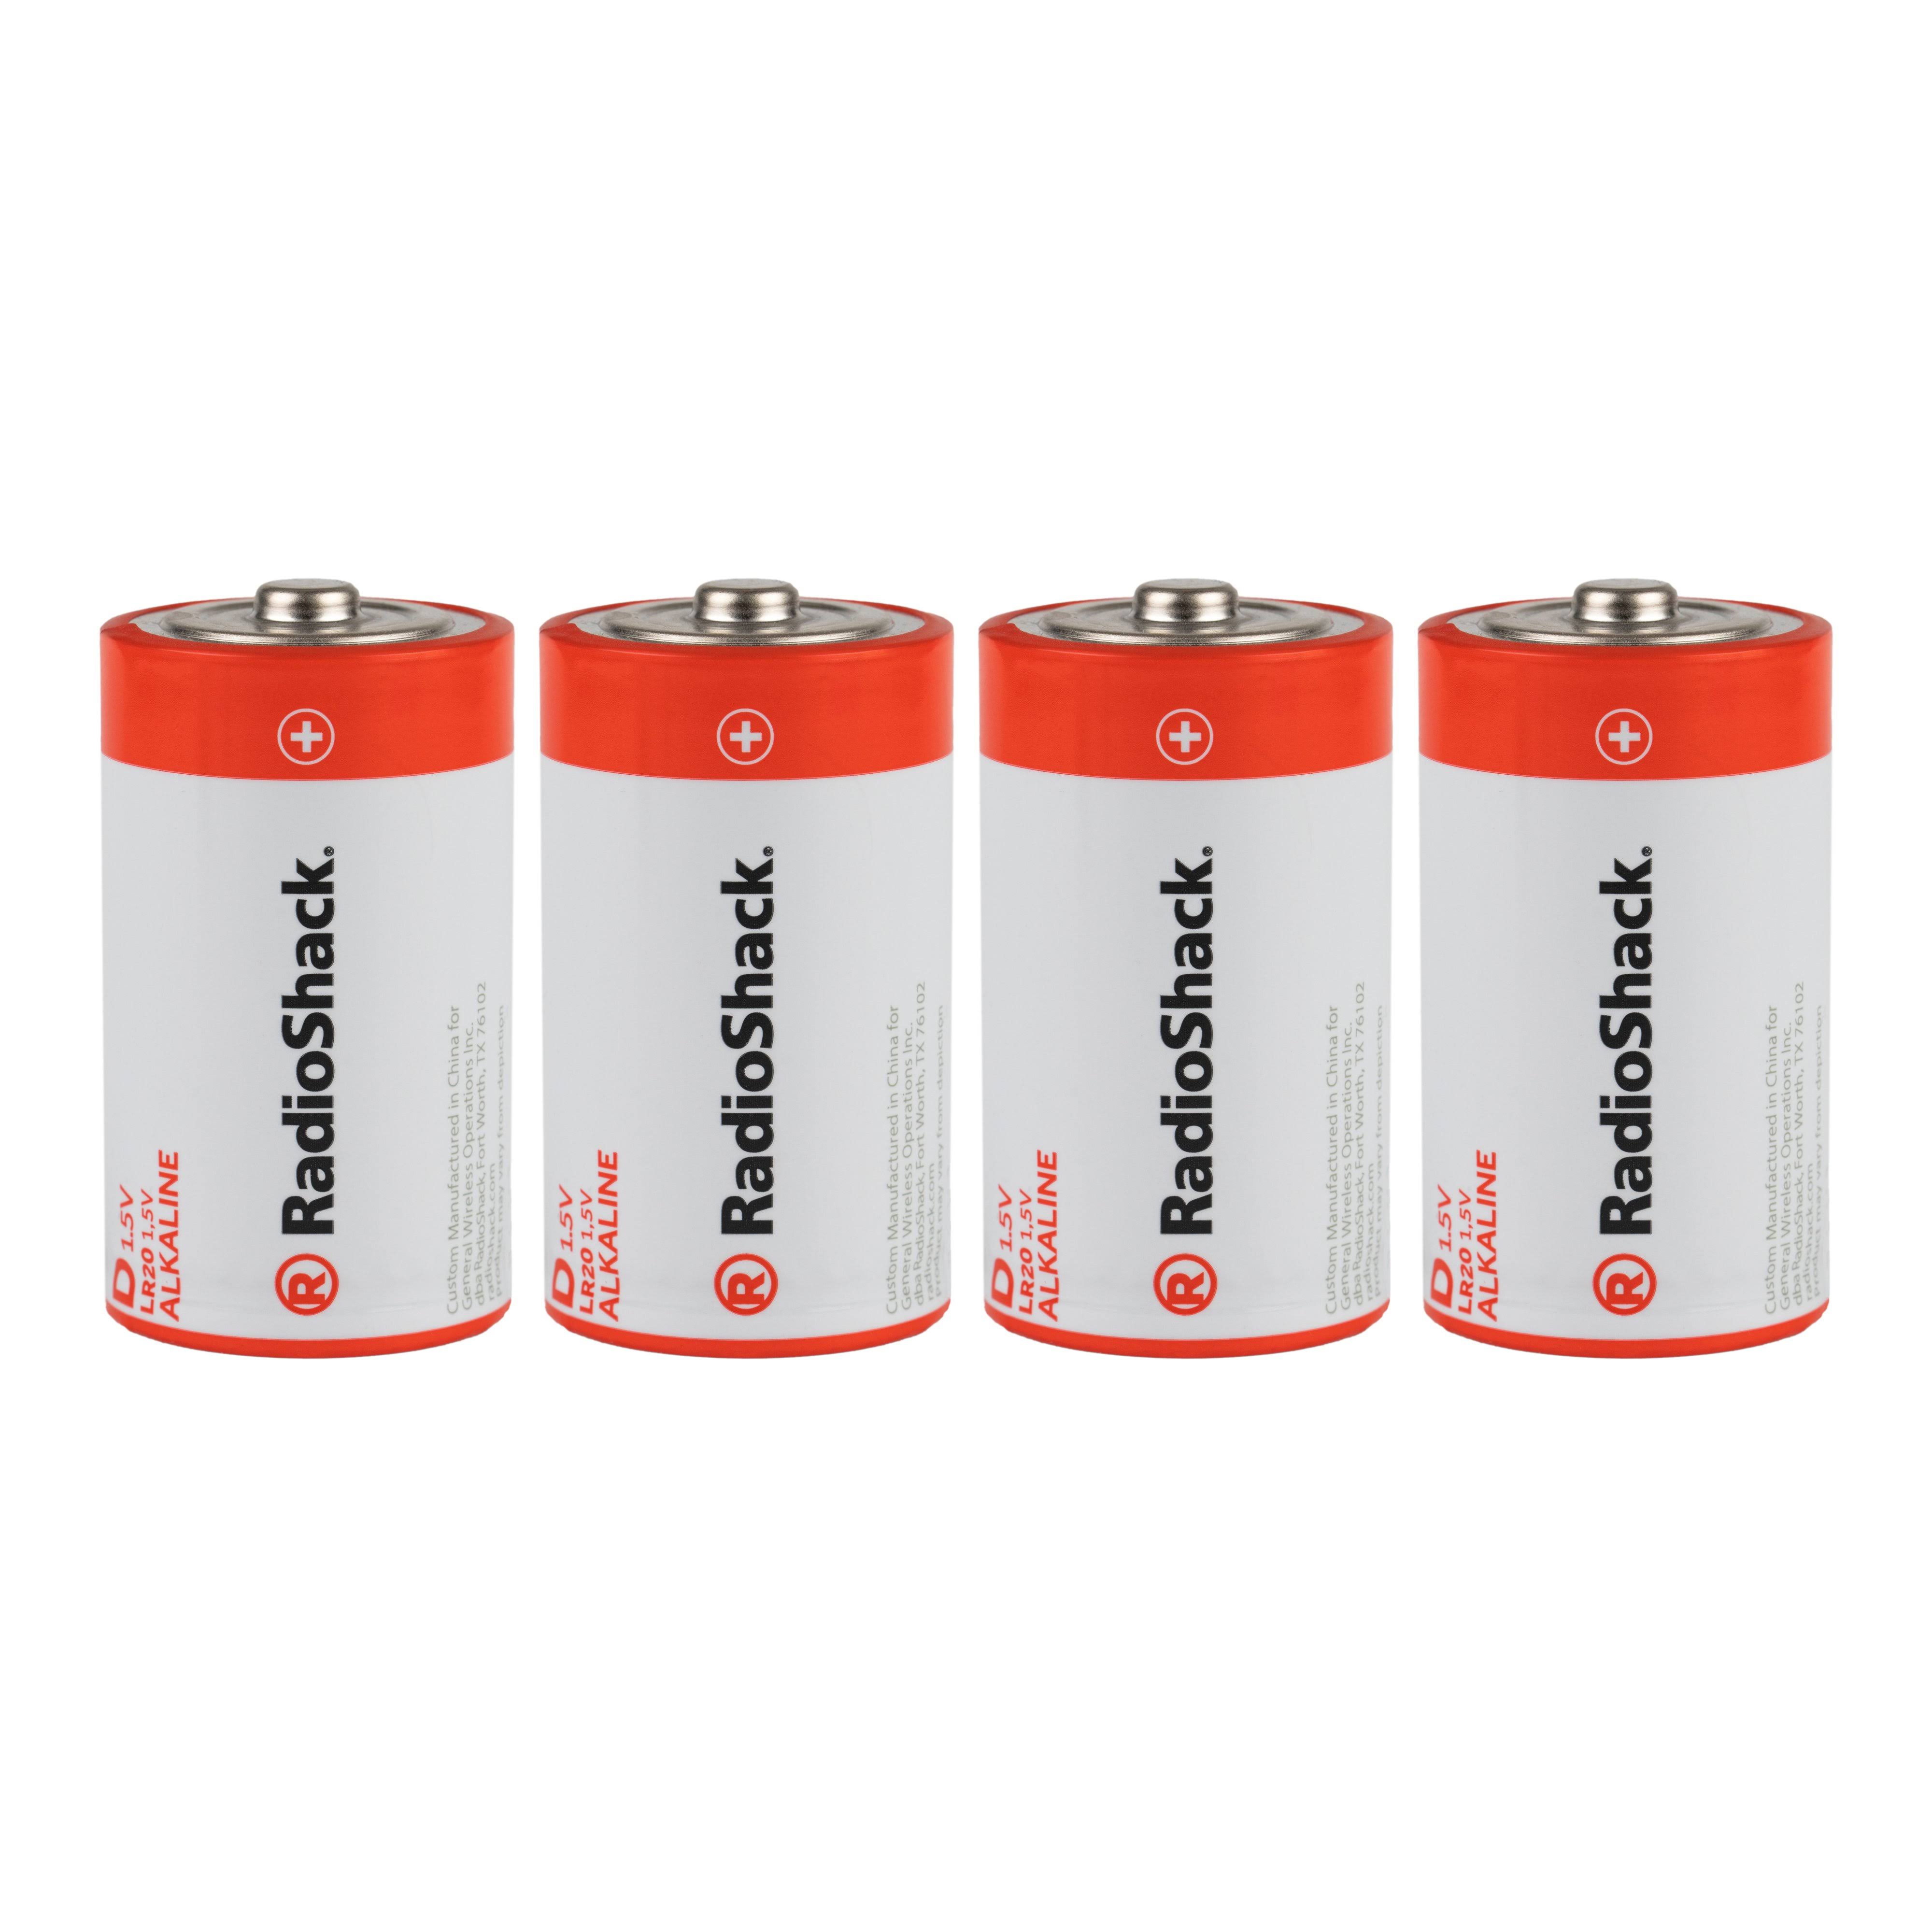 RadioShack Alkaline Batteries - Size D, 4 pk